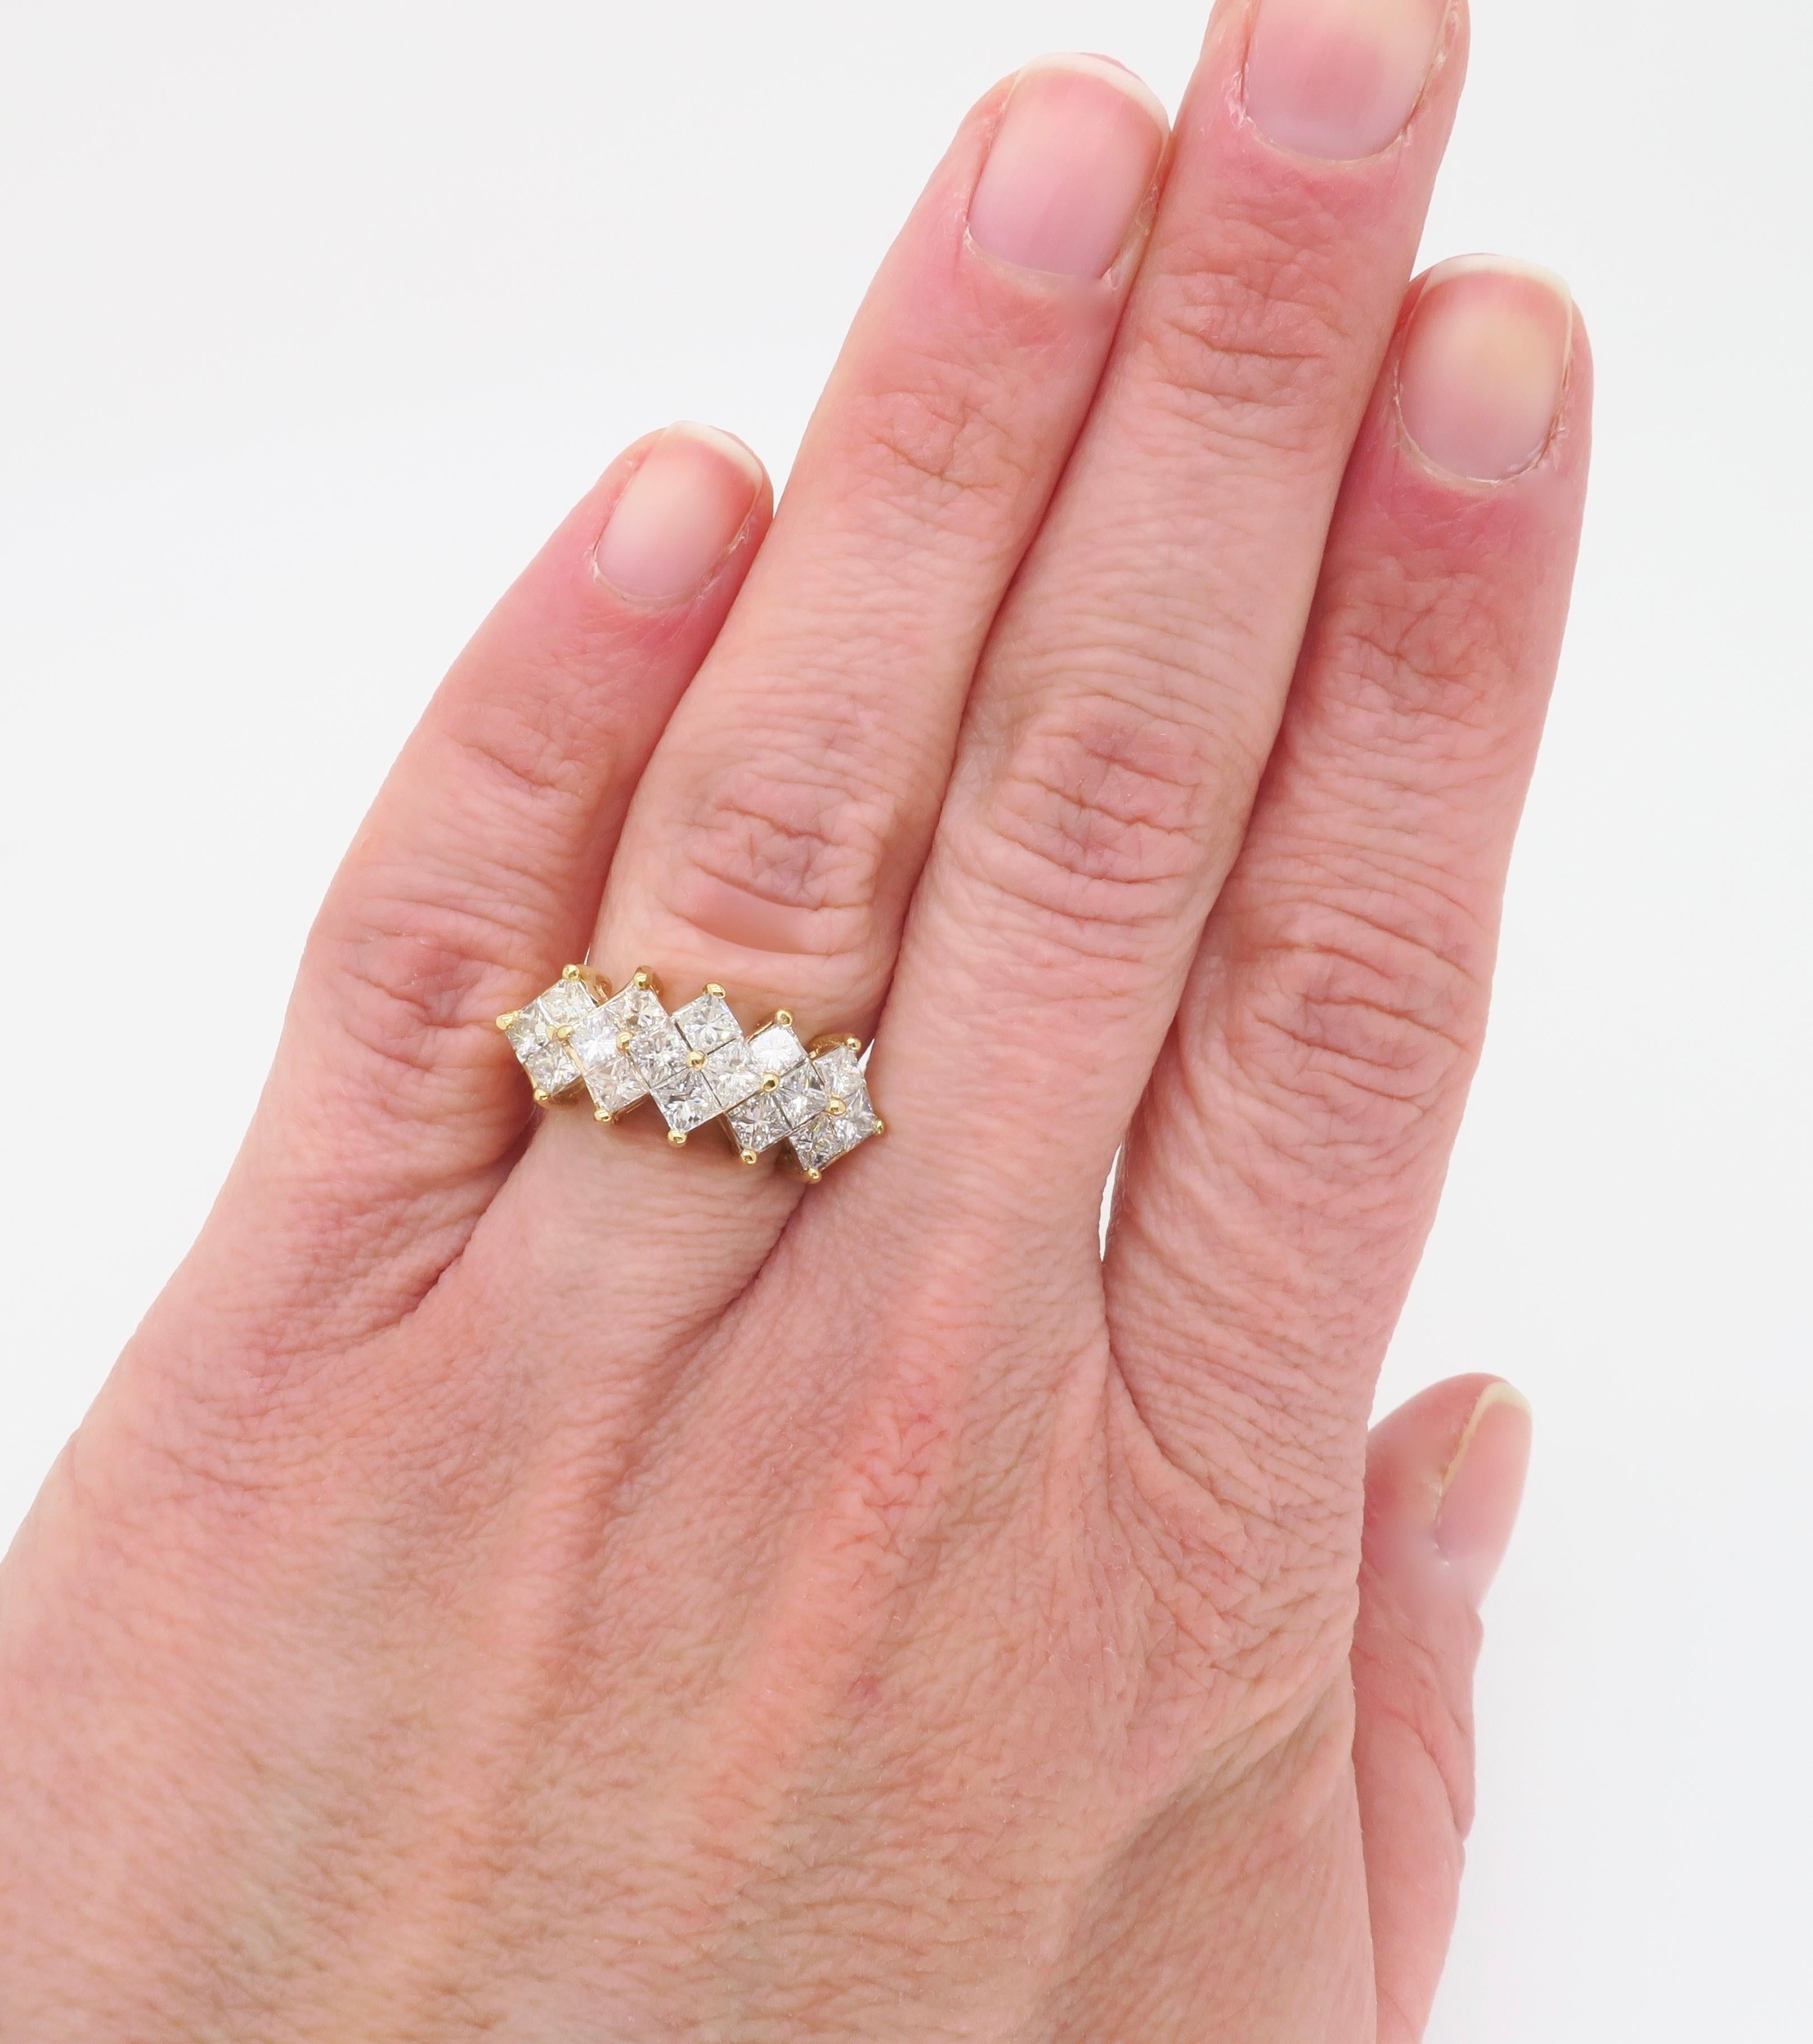 Kite set three-row diamond ring made in 14k yellow gold with 1.28ctw of diamonds. 

Diamond Cut: Princess Cut 
Total Diamond Carat Weight: Approximately 1.28CTW
Average Diamond Color: G-I
Average Diamond Clarity: VS-SI
Metal: 14k Yellow Gold
Ring